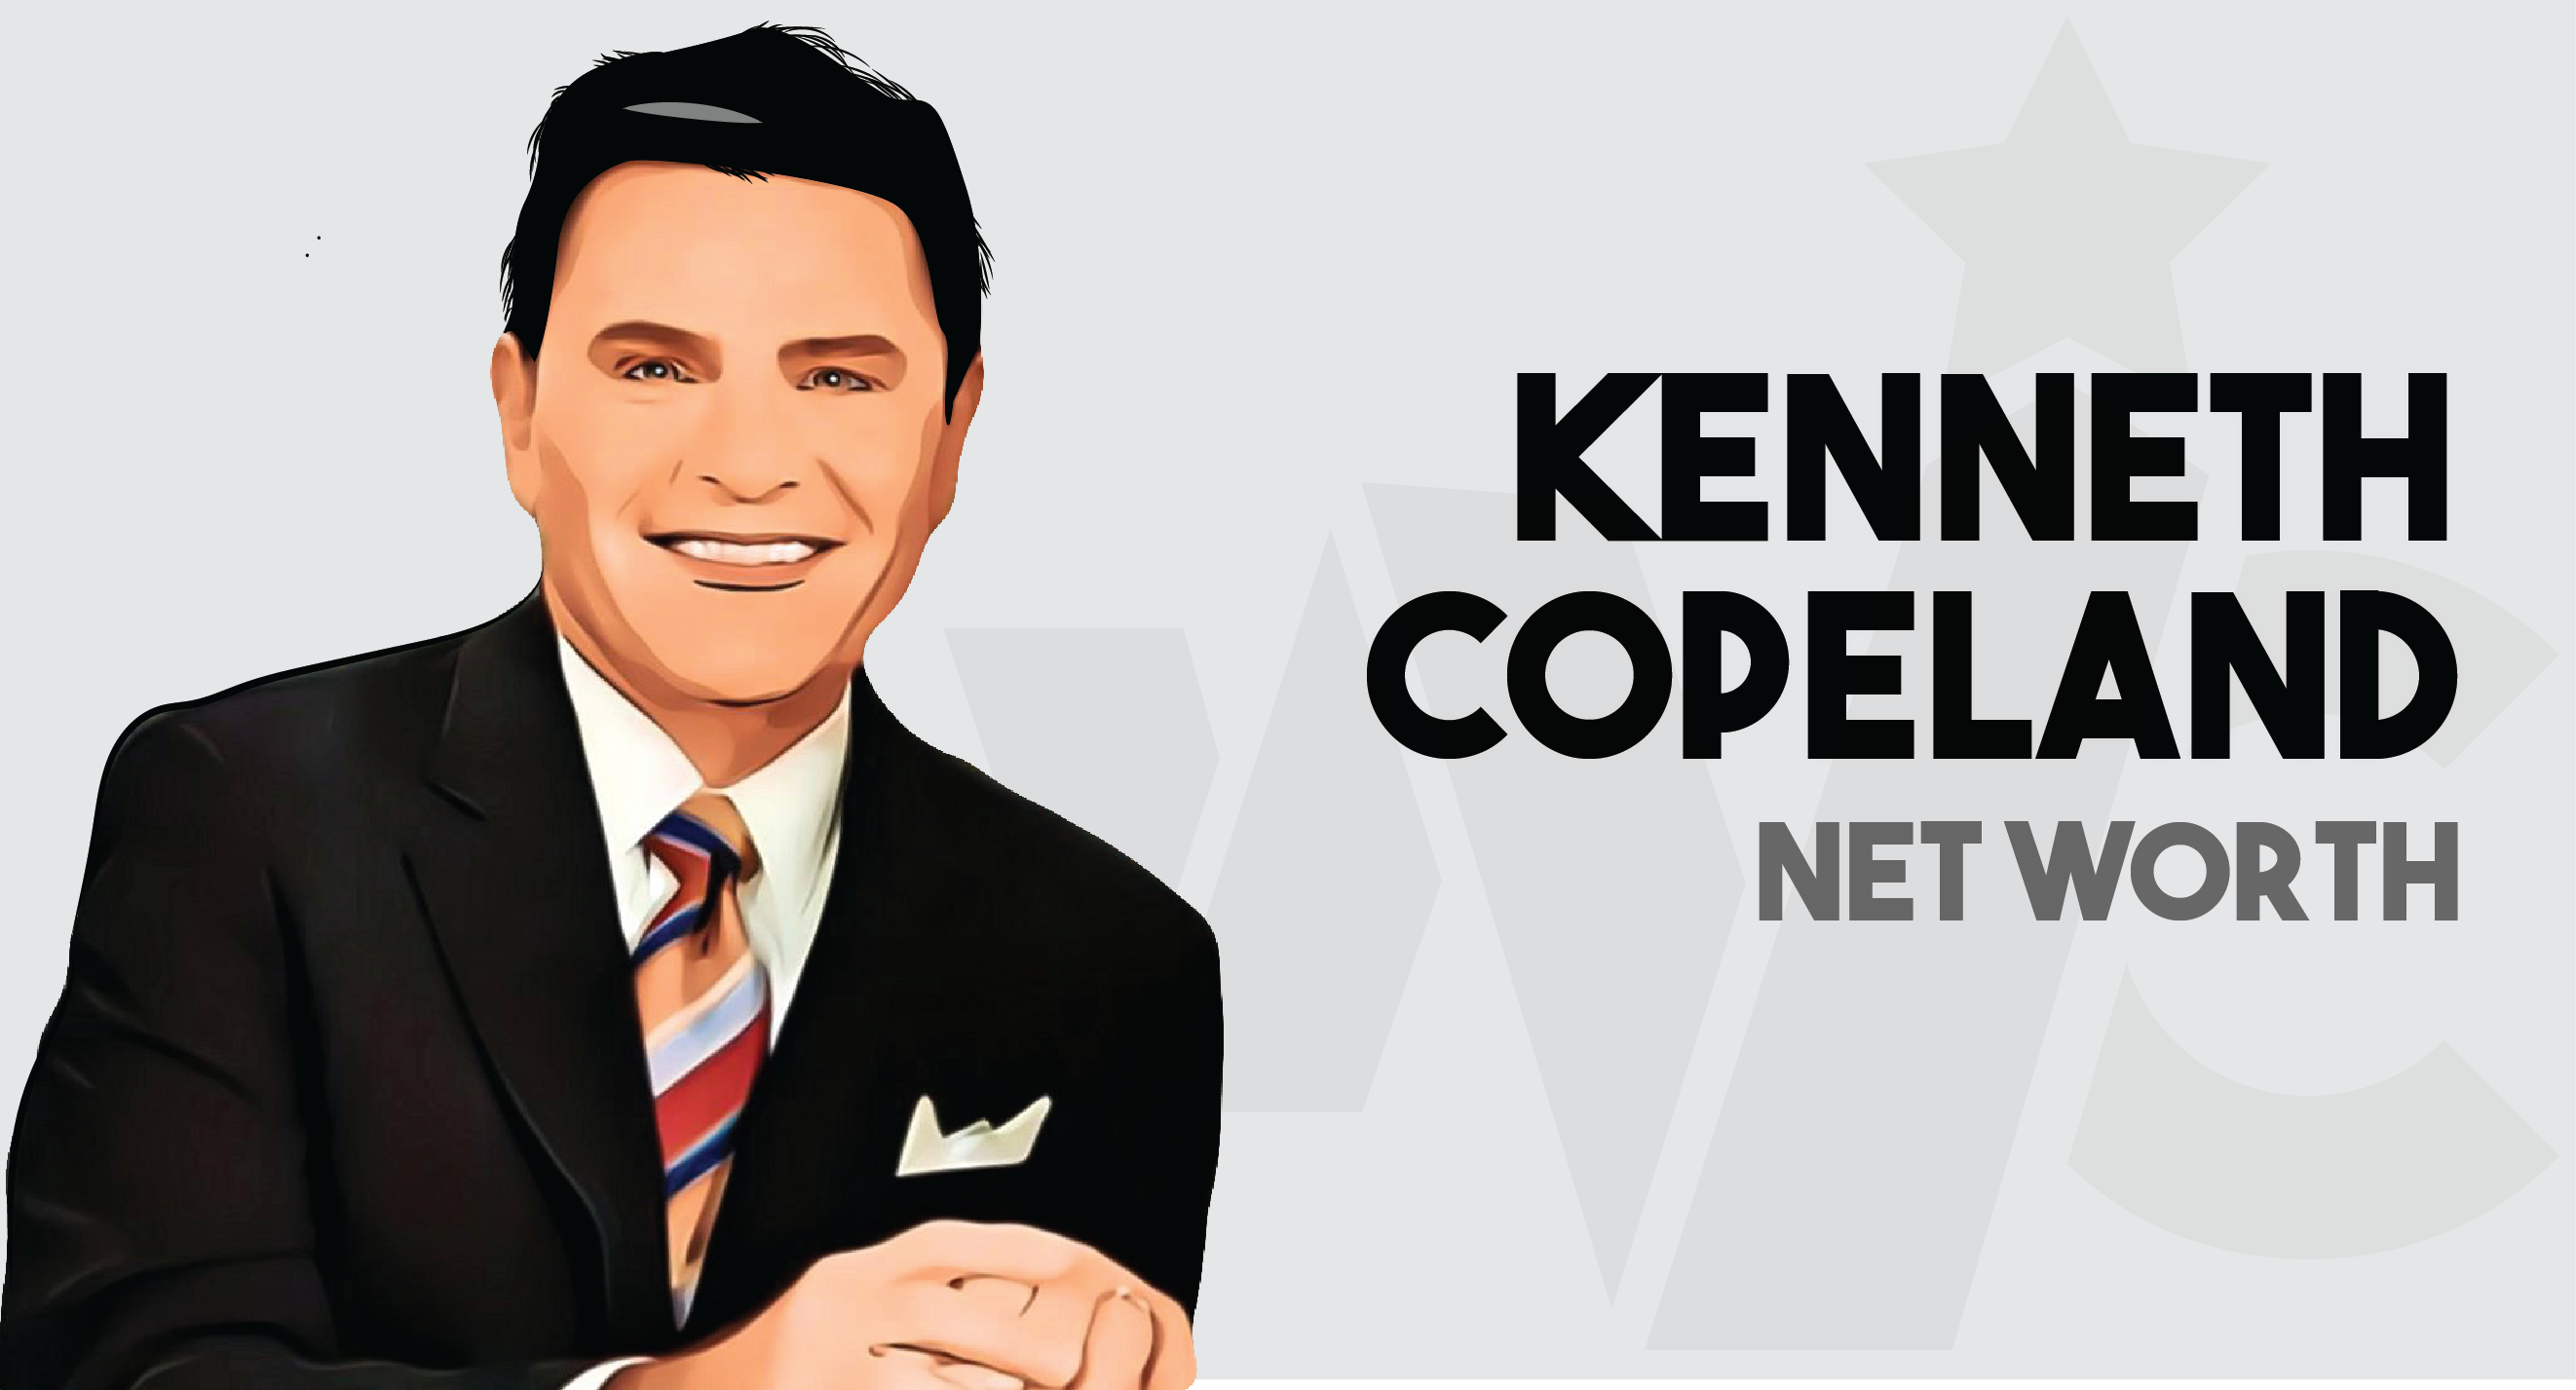 Kenneth Copeland - Net worth